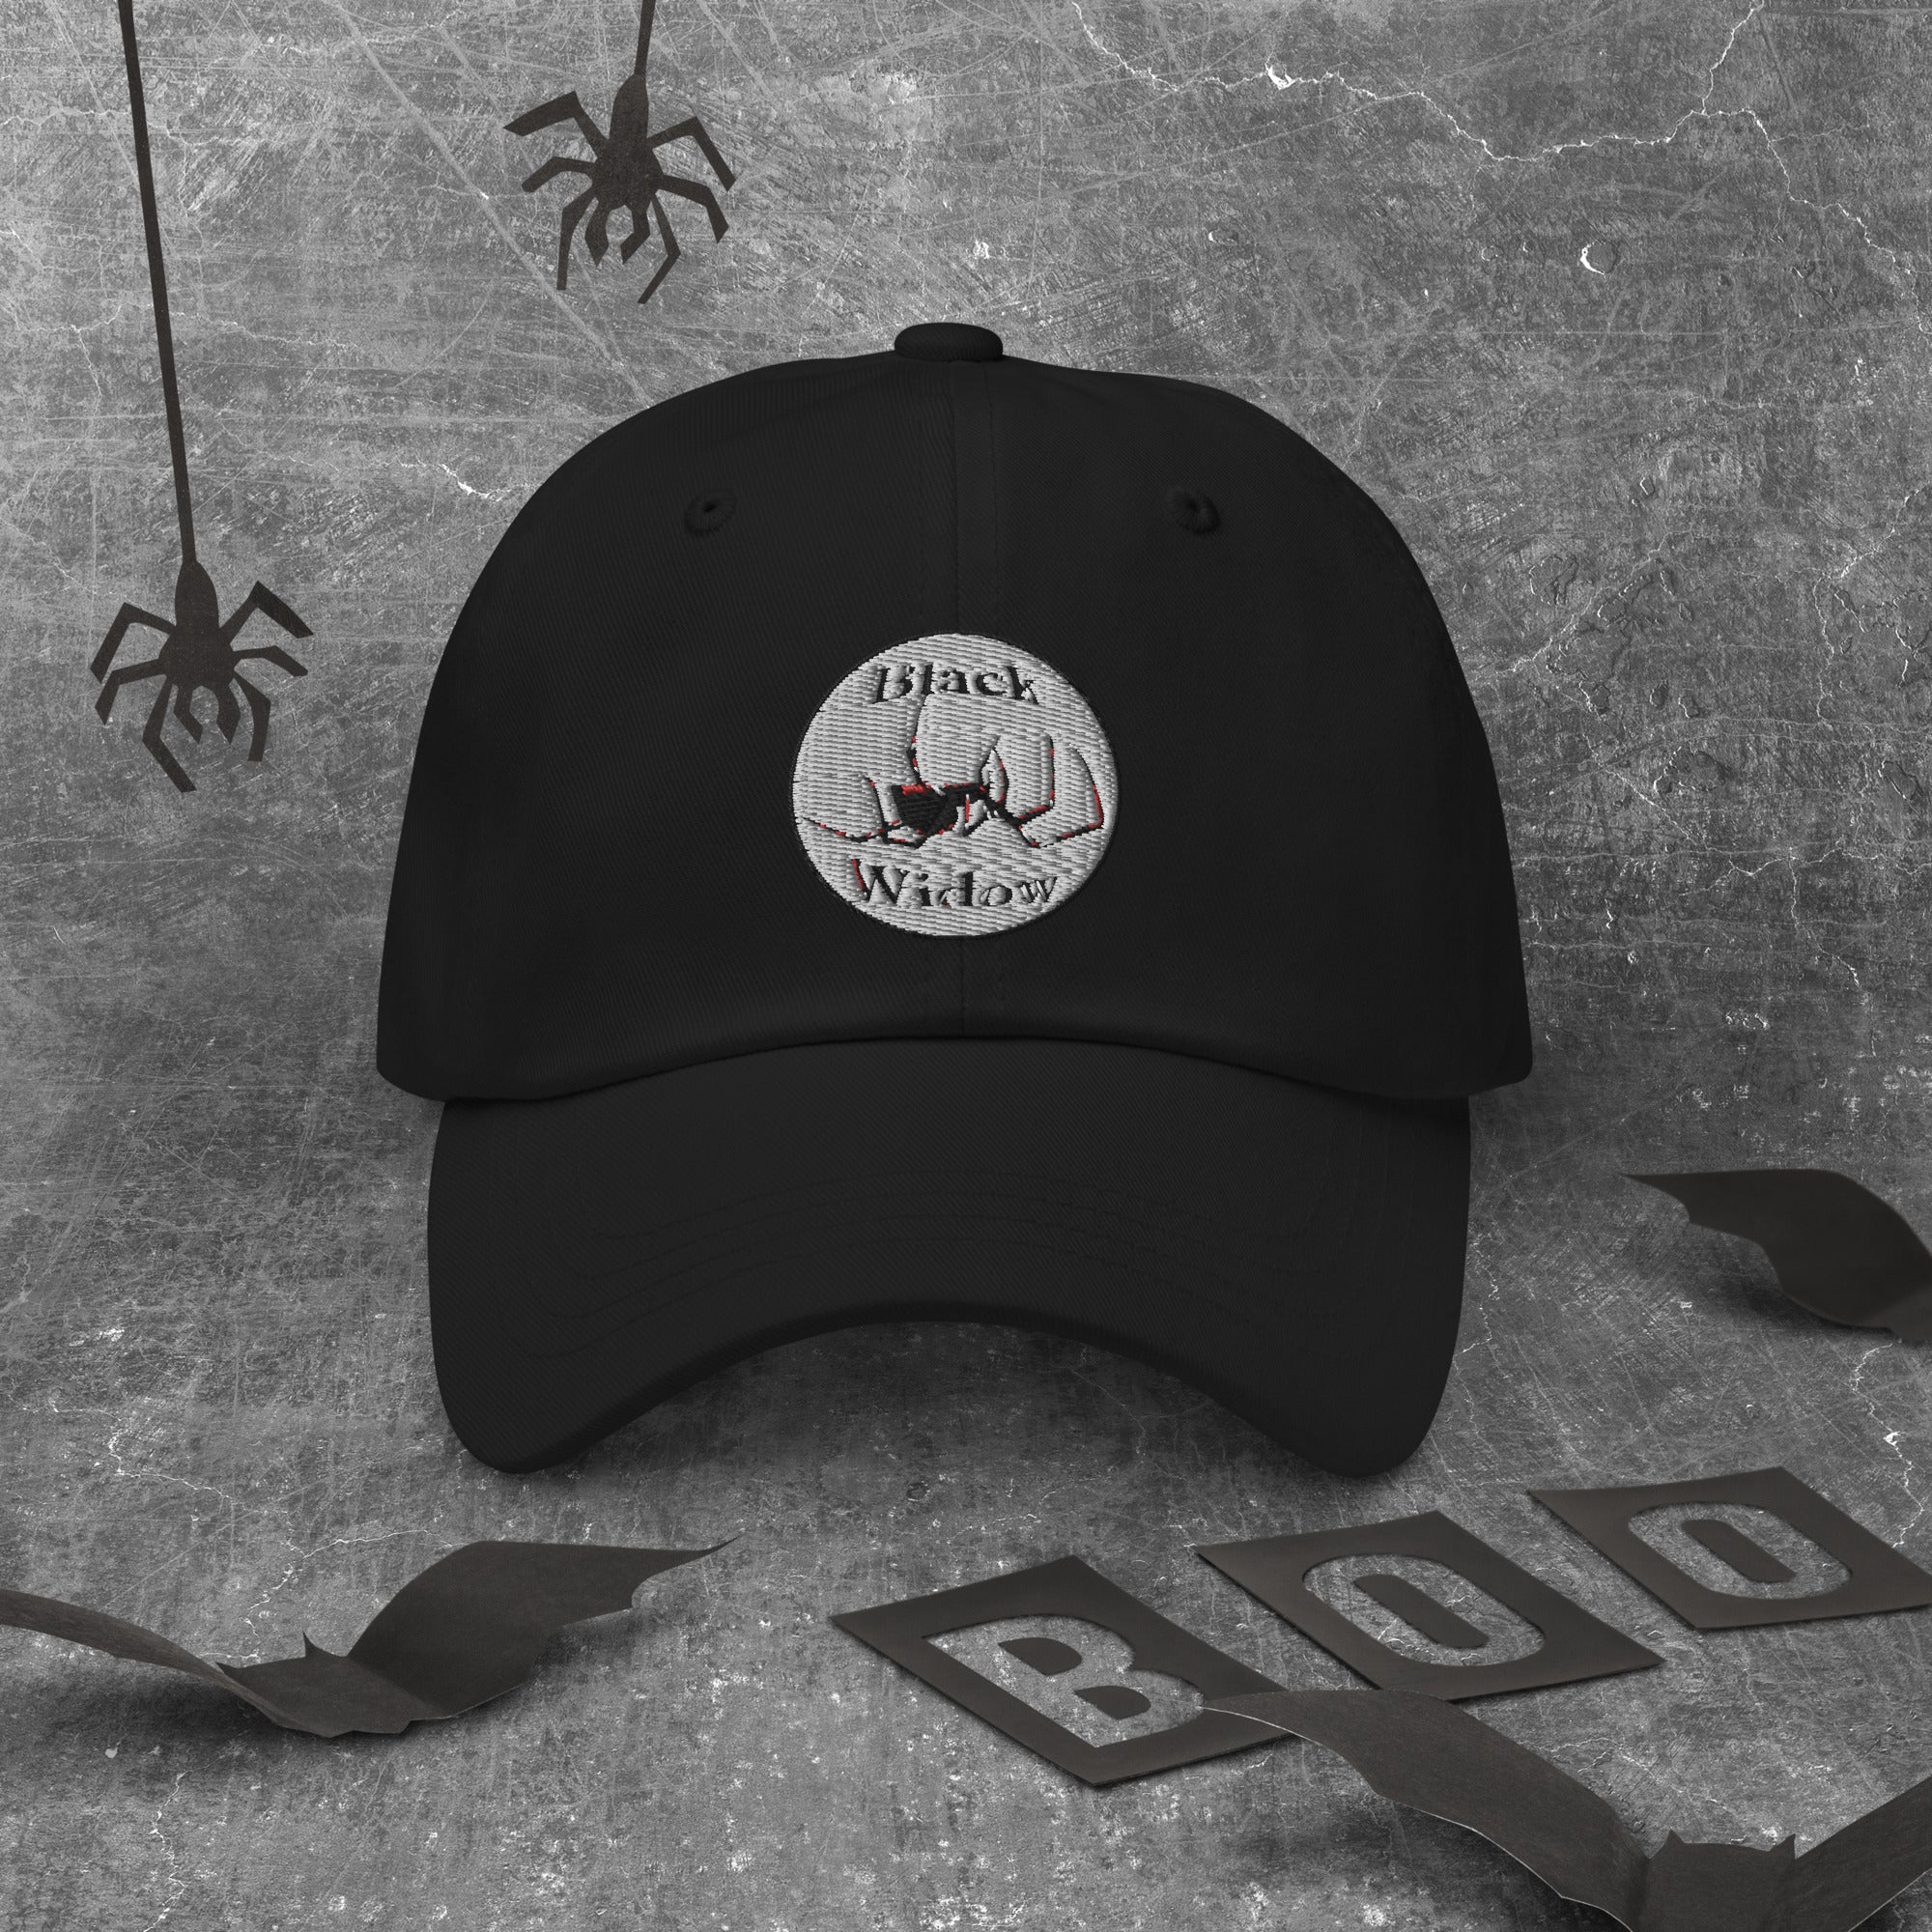 Latrodectus Black Widow Spider Embroidered Baseball Cap Dad hat Arachnid - Edge of Life Designs